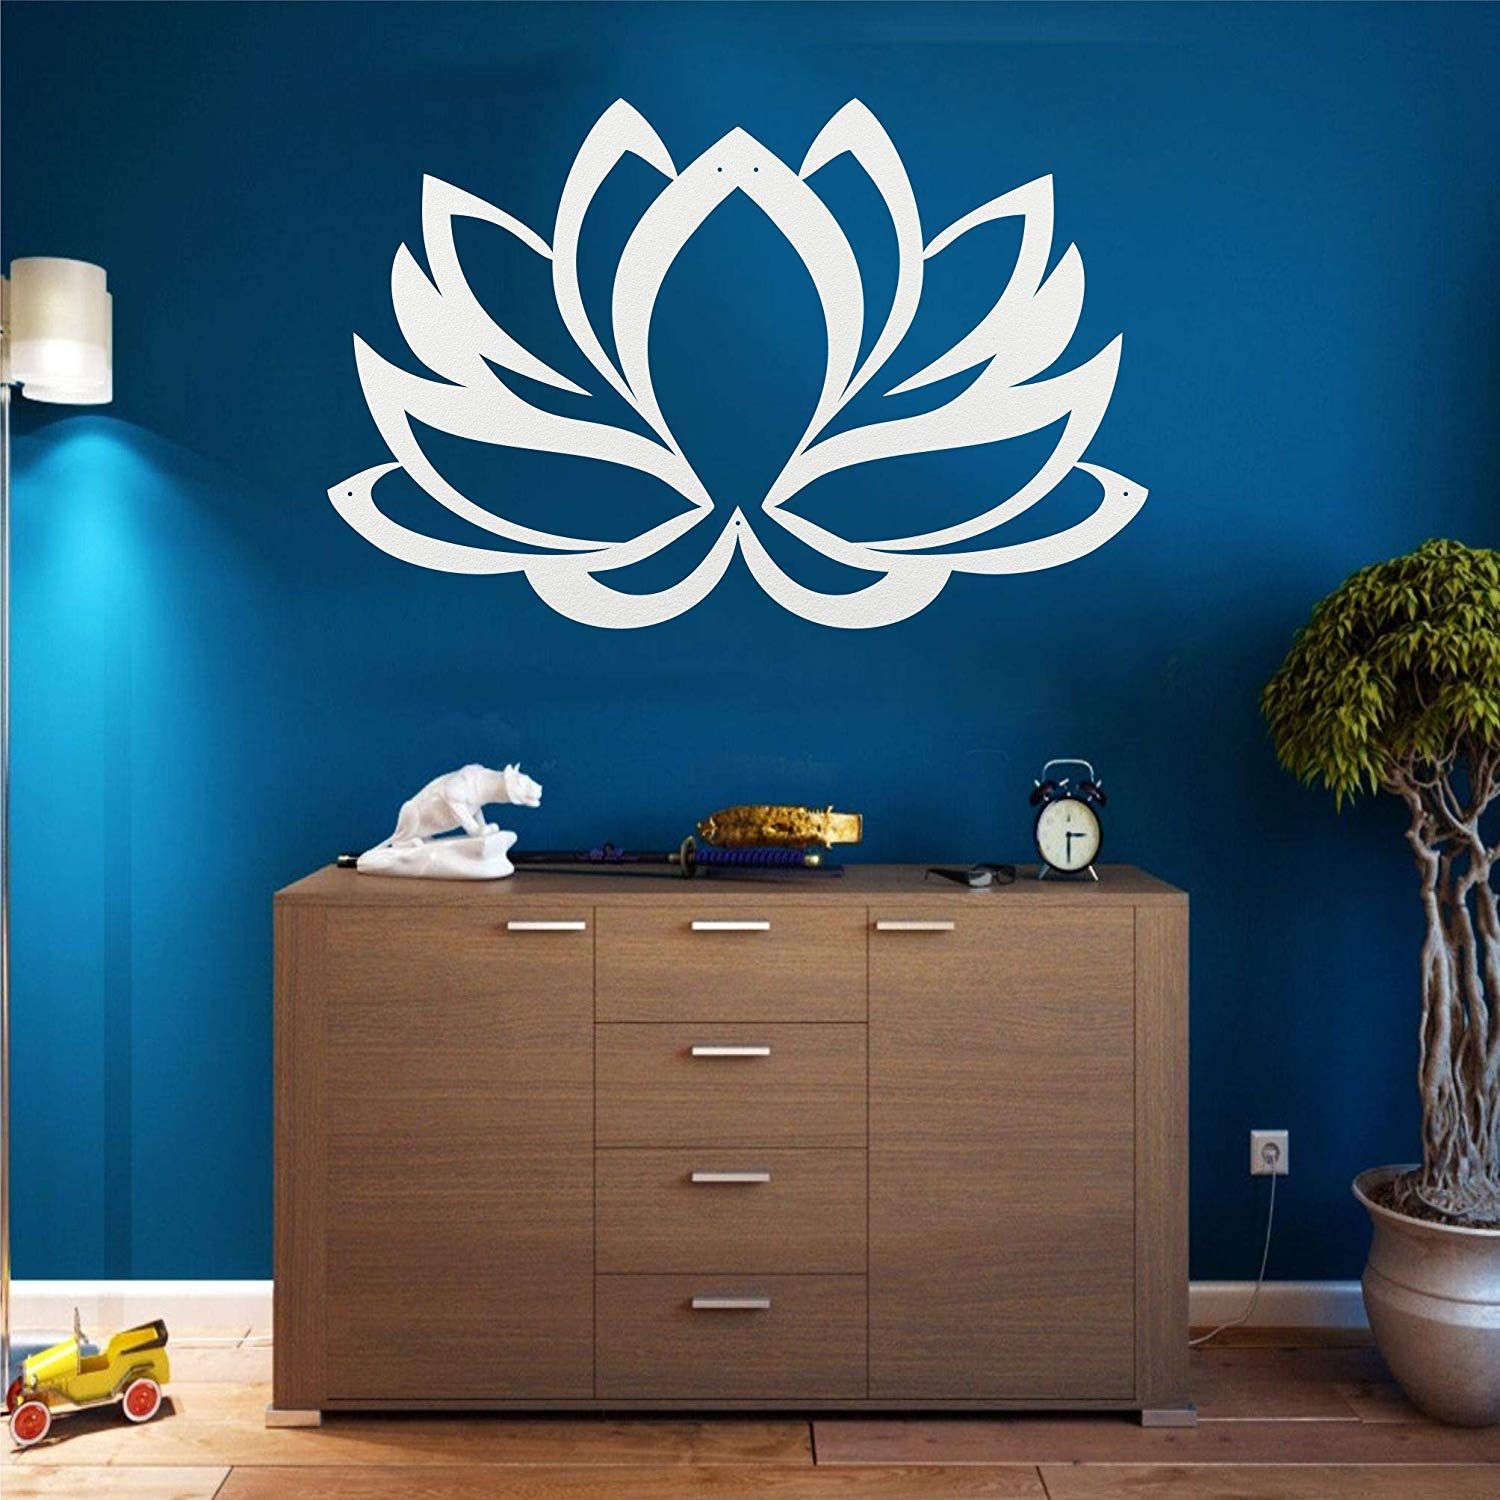 Lamodahome Metal Wall Art – Lotus Flower – 3d Wall Silhouette Metal With Regard To 2018 Polished Metal Wall Art (View 11 of 20)